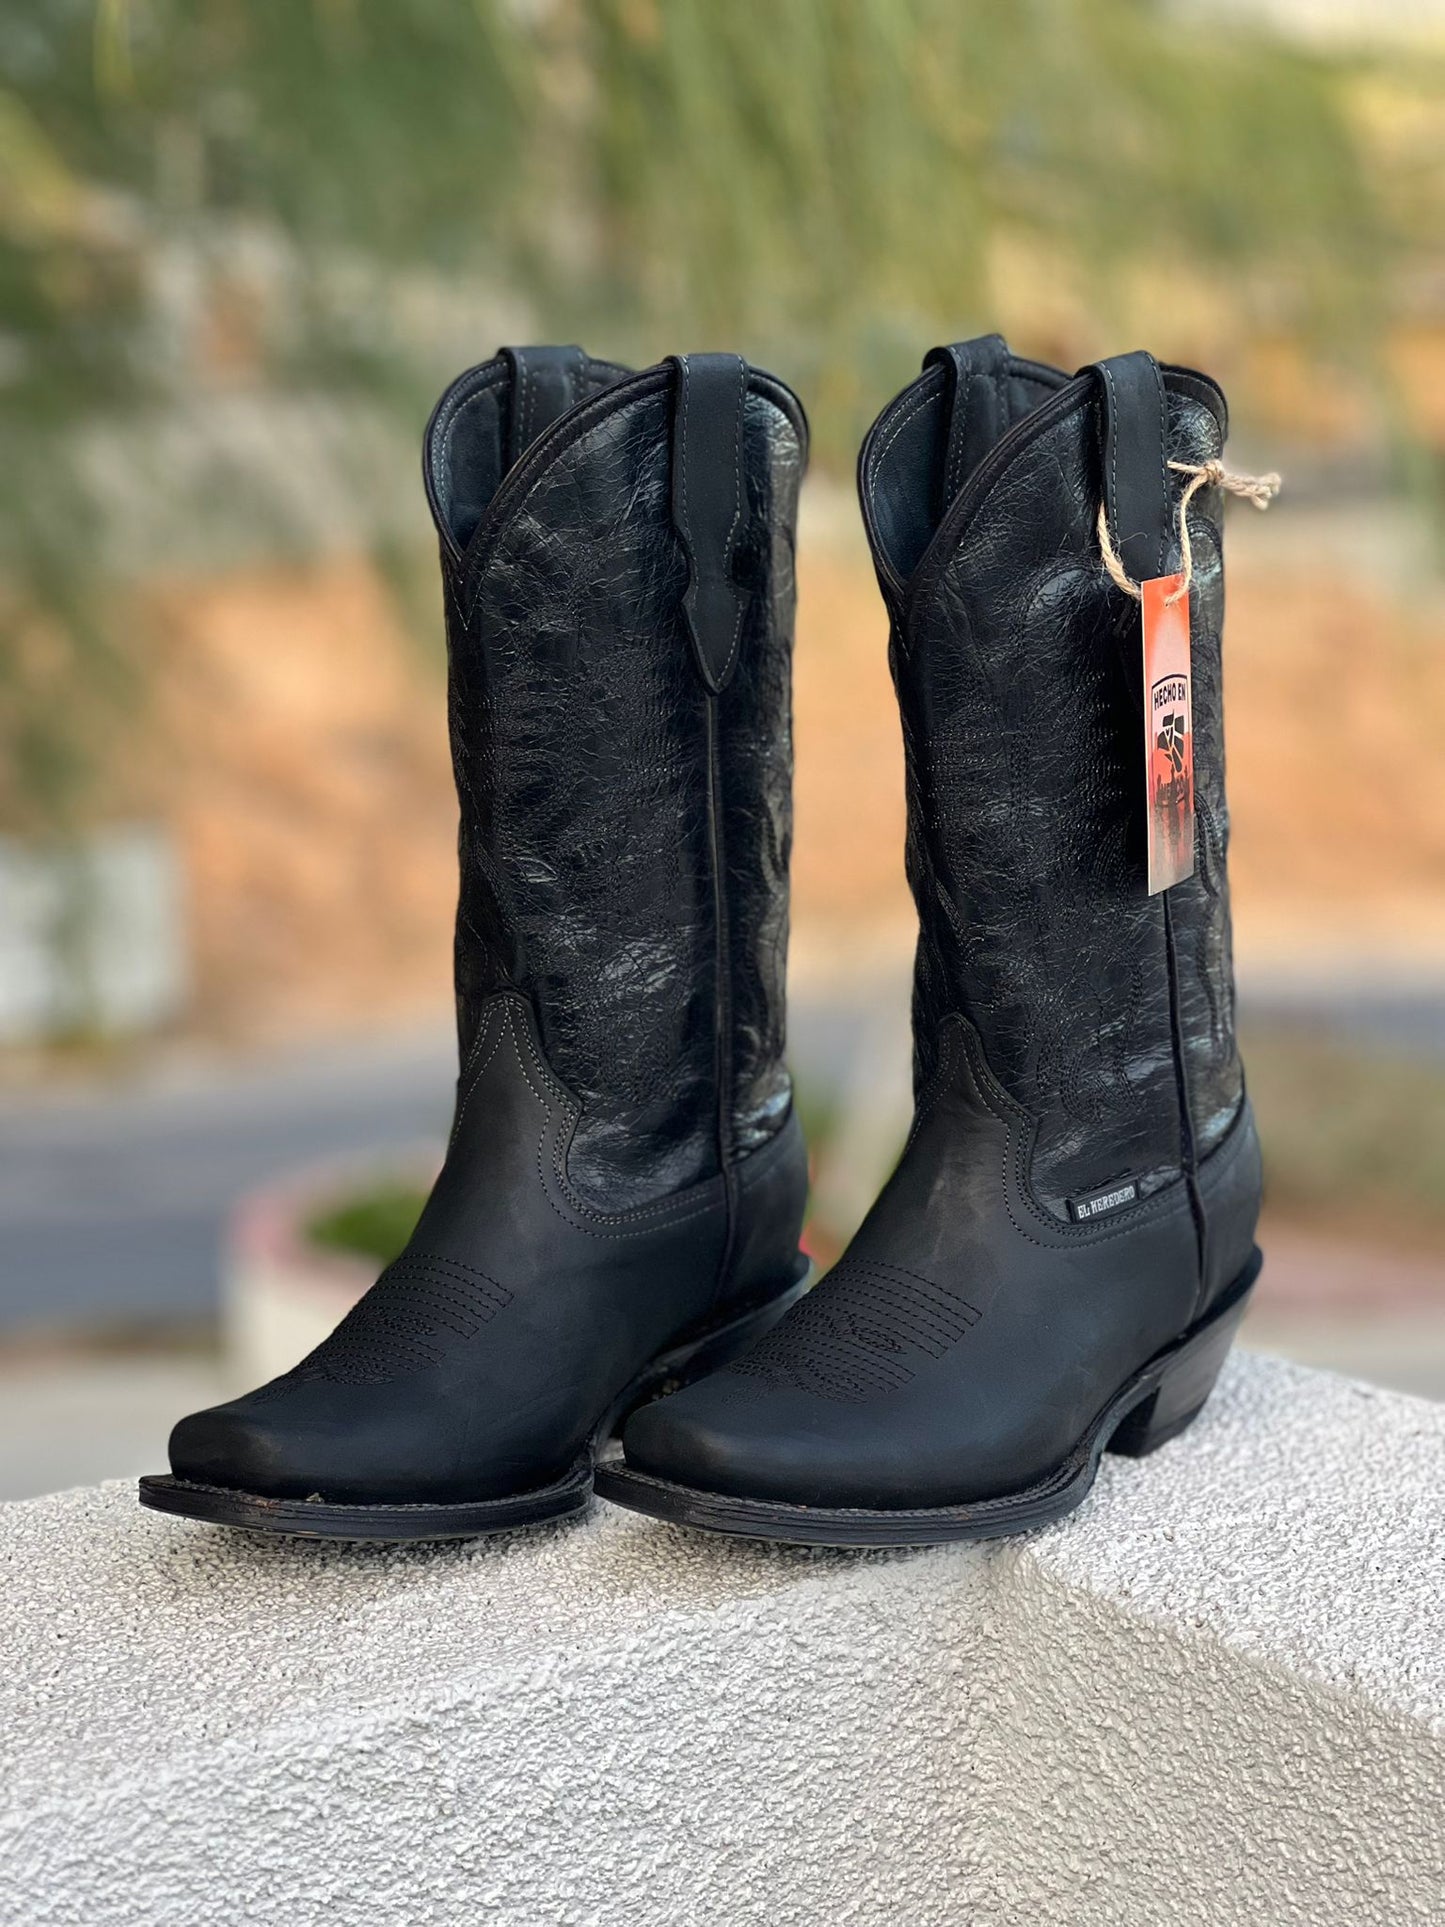 Black boots